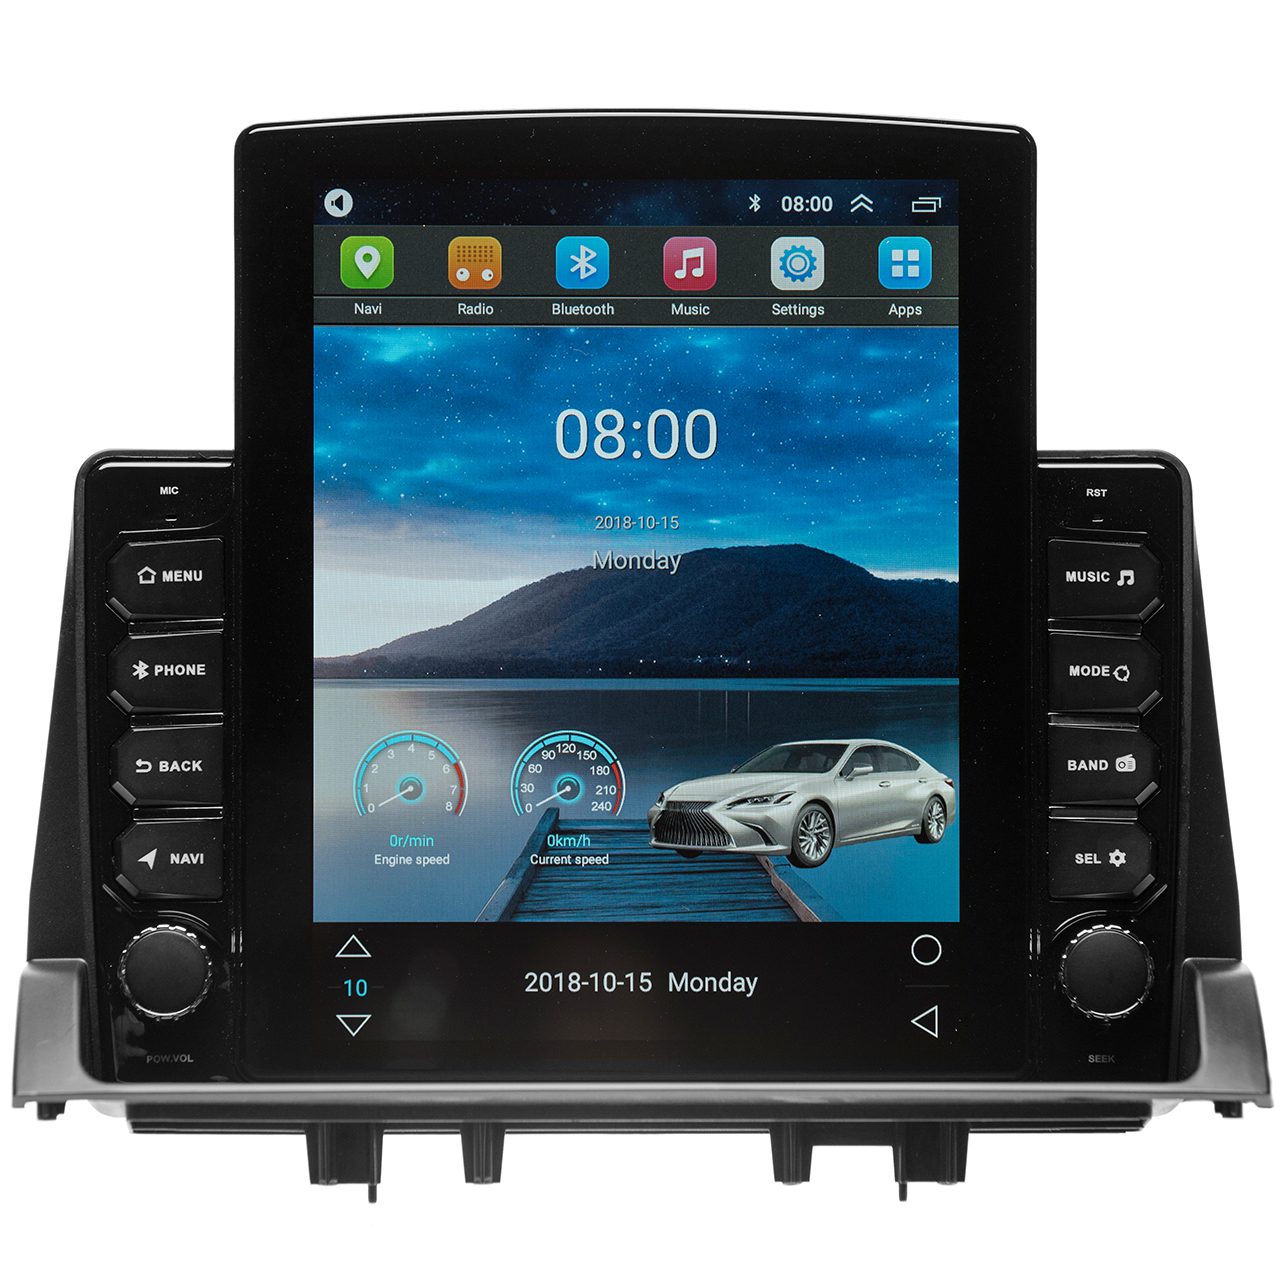 Navigatie AUTONAV ECO Android GPS Dedicata Mazda 6 2002-2008, Model XPERT Memorie 16GB Stocare, 1GB DDR3 RAM, Butoane Si Volum Fizice, Display Vertical Stil Tesla 10